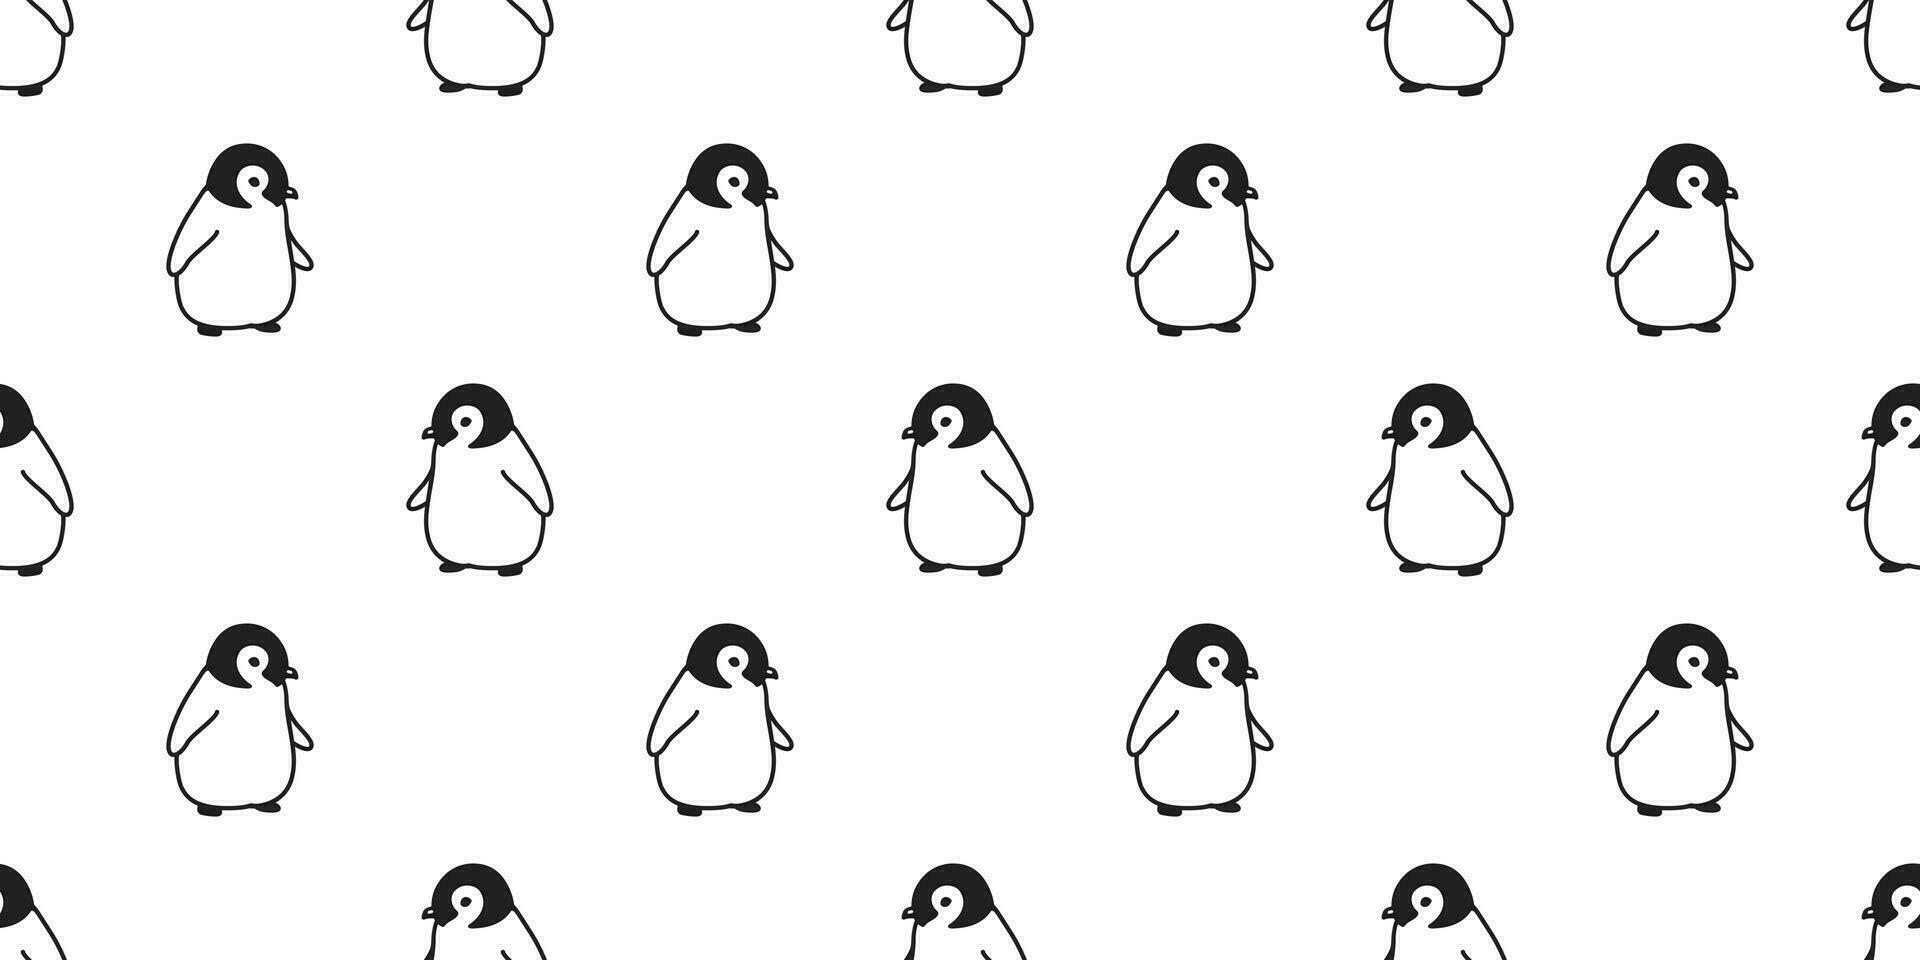 penguin Seamless pattern vector cartoon fish salmon bird tile background scarf isolated repeat wallpaper illustration